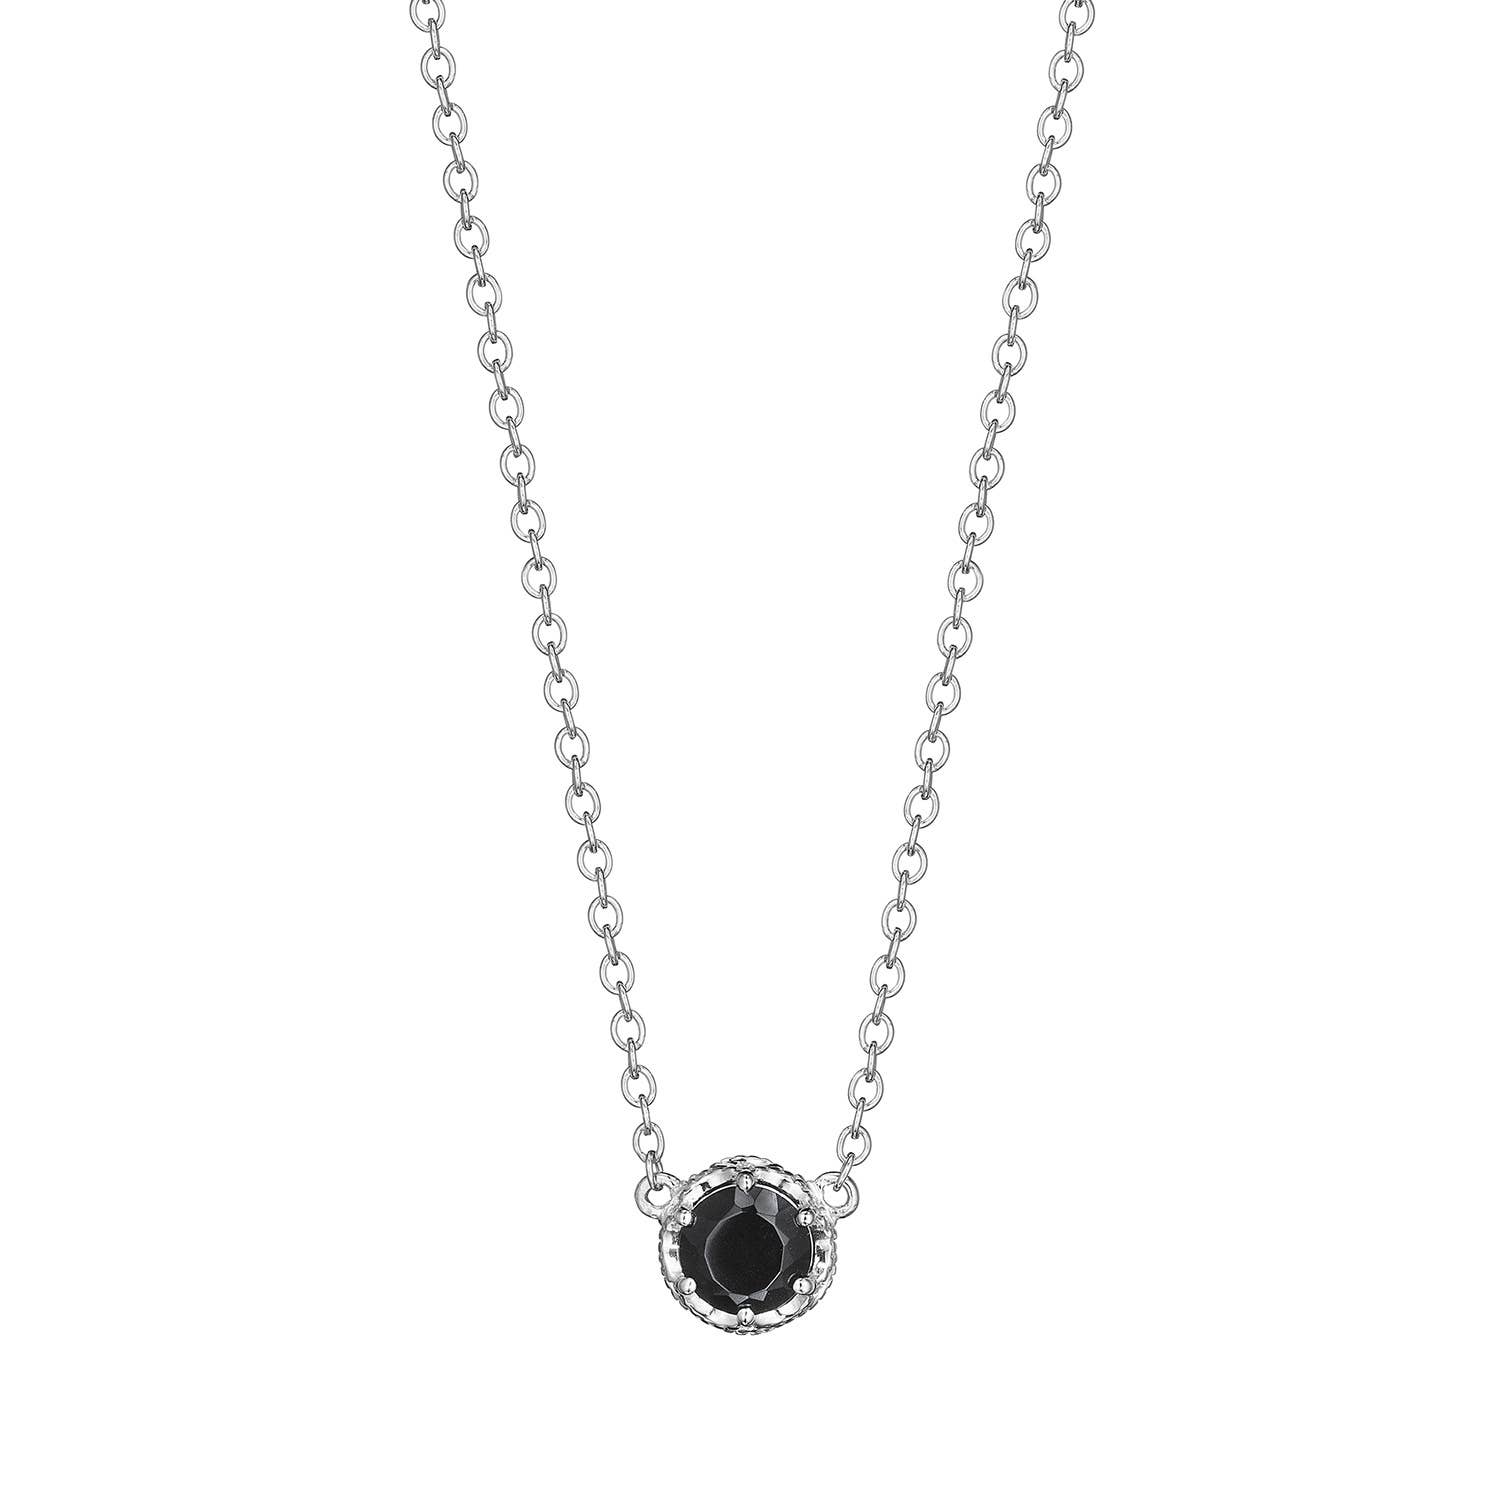 Petite Crescent Crown Gem Necklace featuring Black Onyx